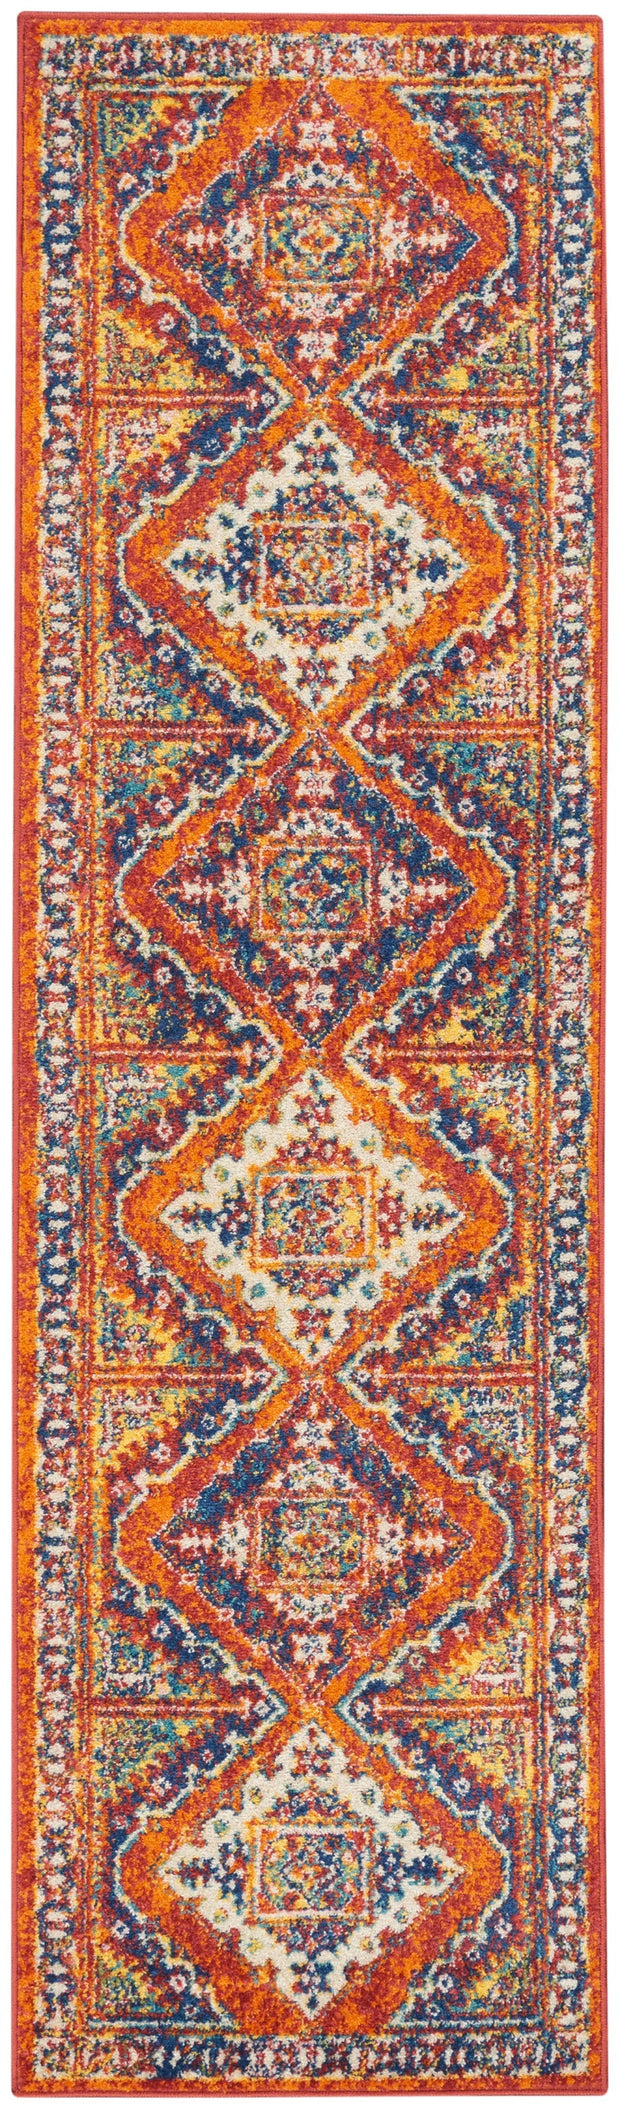 allur orange multicolor rug by nourison 99446837318 redo 2